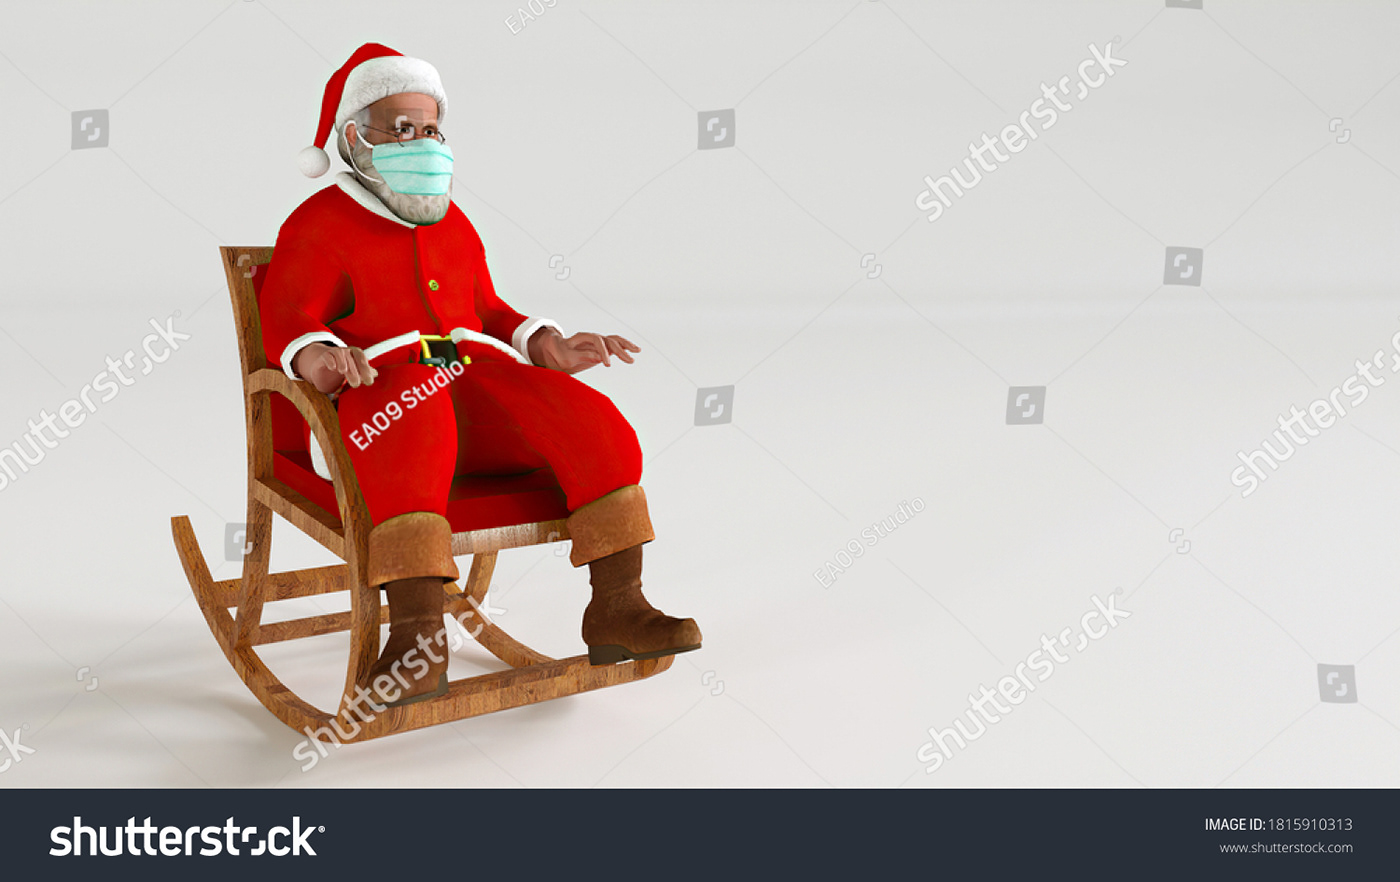 2021 New Year Christmas corona virus Covid 19 Holiday merry chrristmas Santa Claus xmas yeni il Новый год